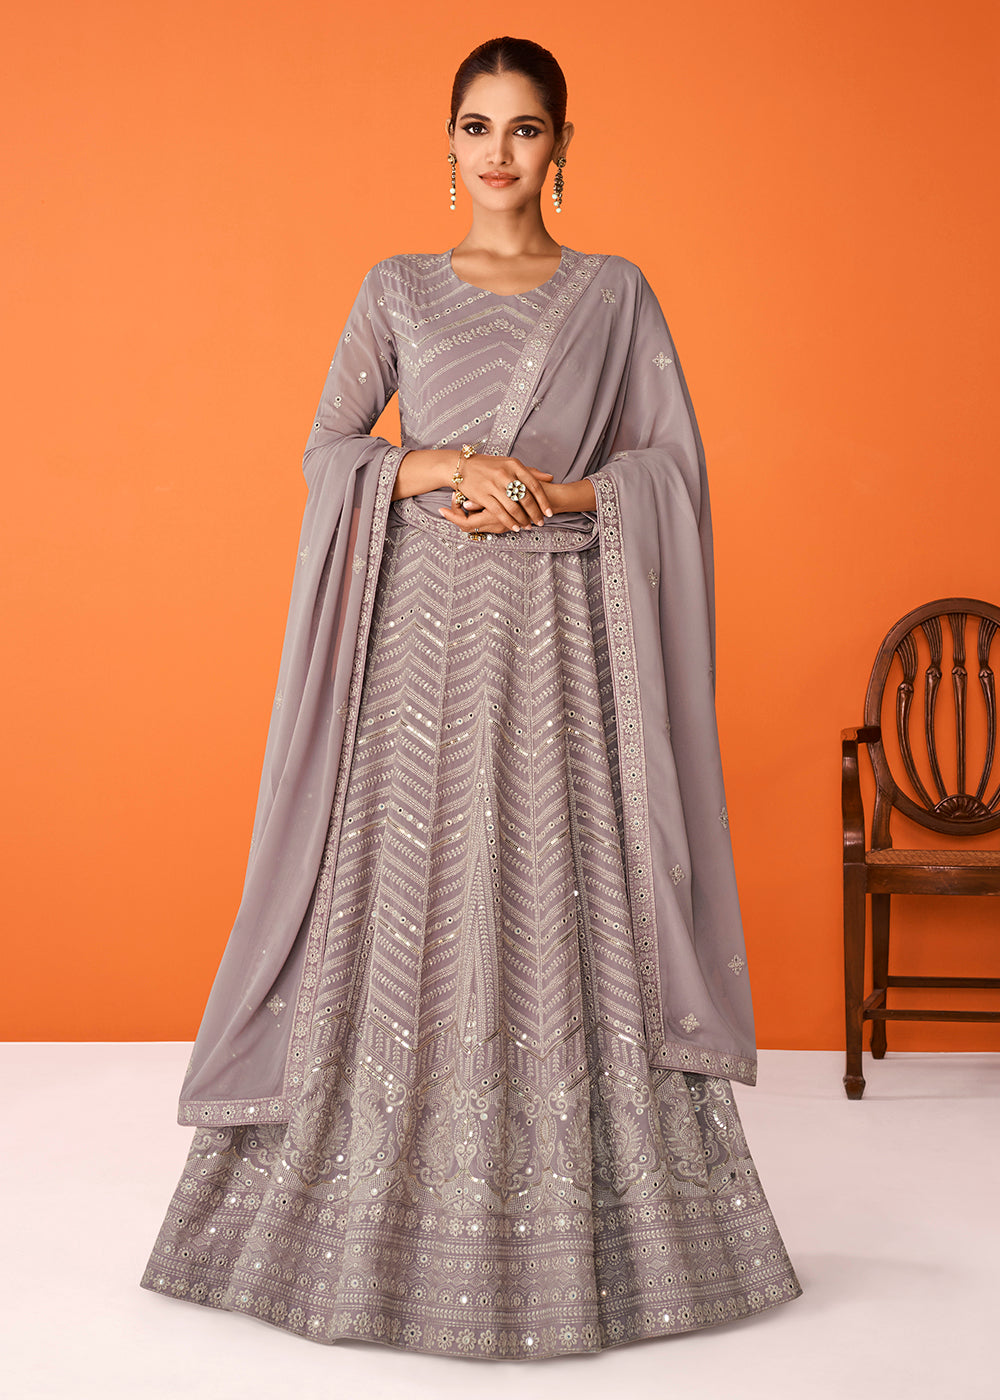 Buy Now Grey Wedding Festive Special Georgette Anarkali Suit Online in USA, UK, Australia, New Zealand, Canada & Worldwide at Empress Clothing. 